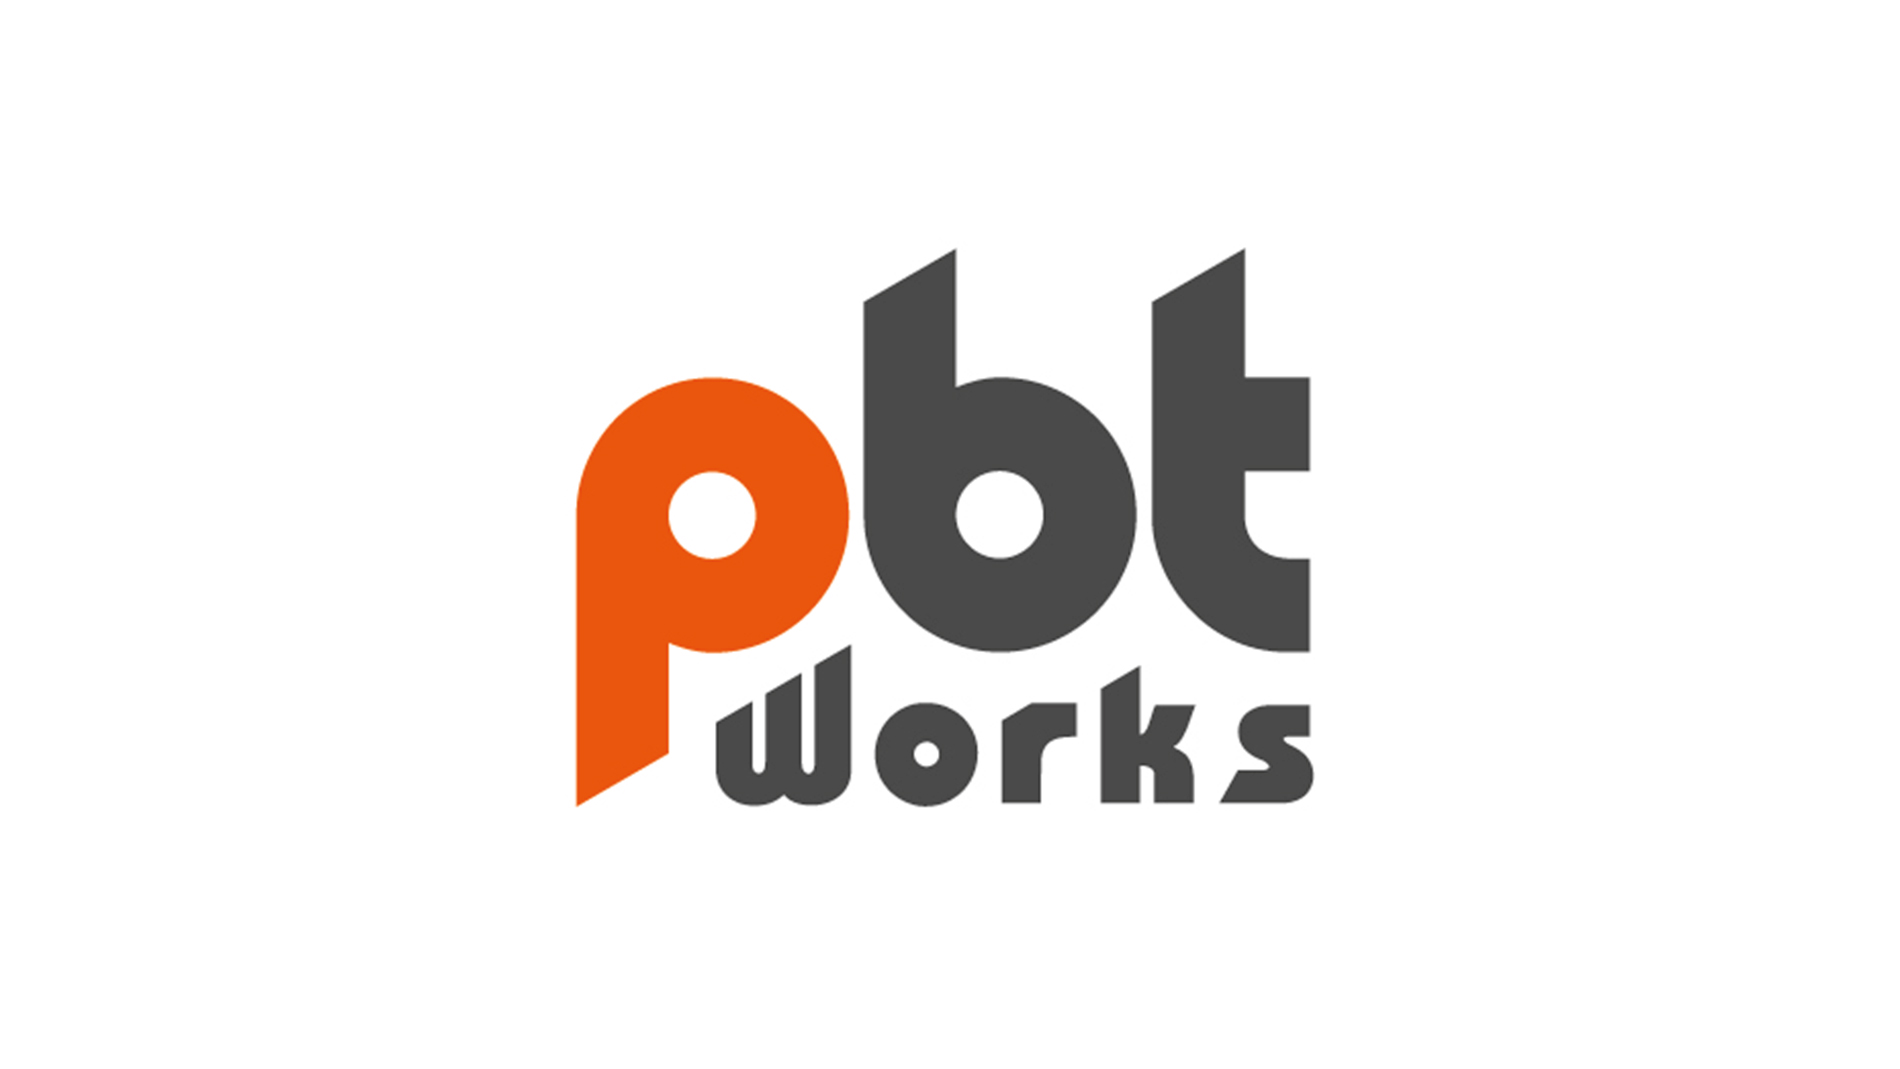 pbt-works_logo_final_CMYK